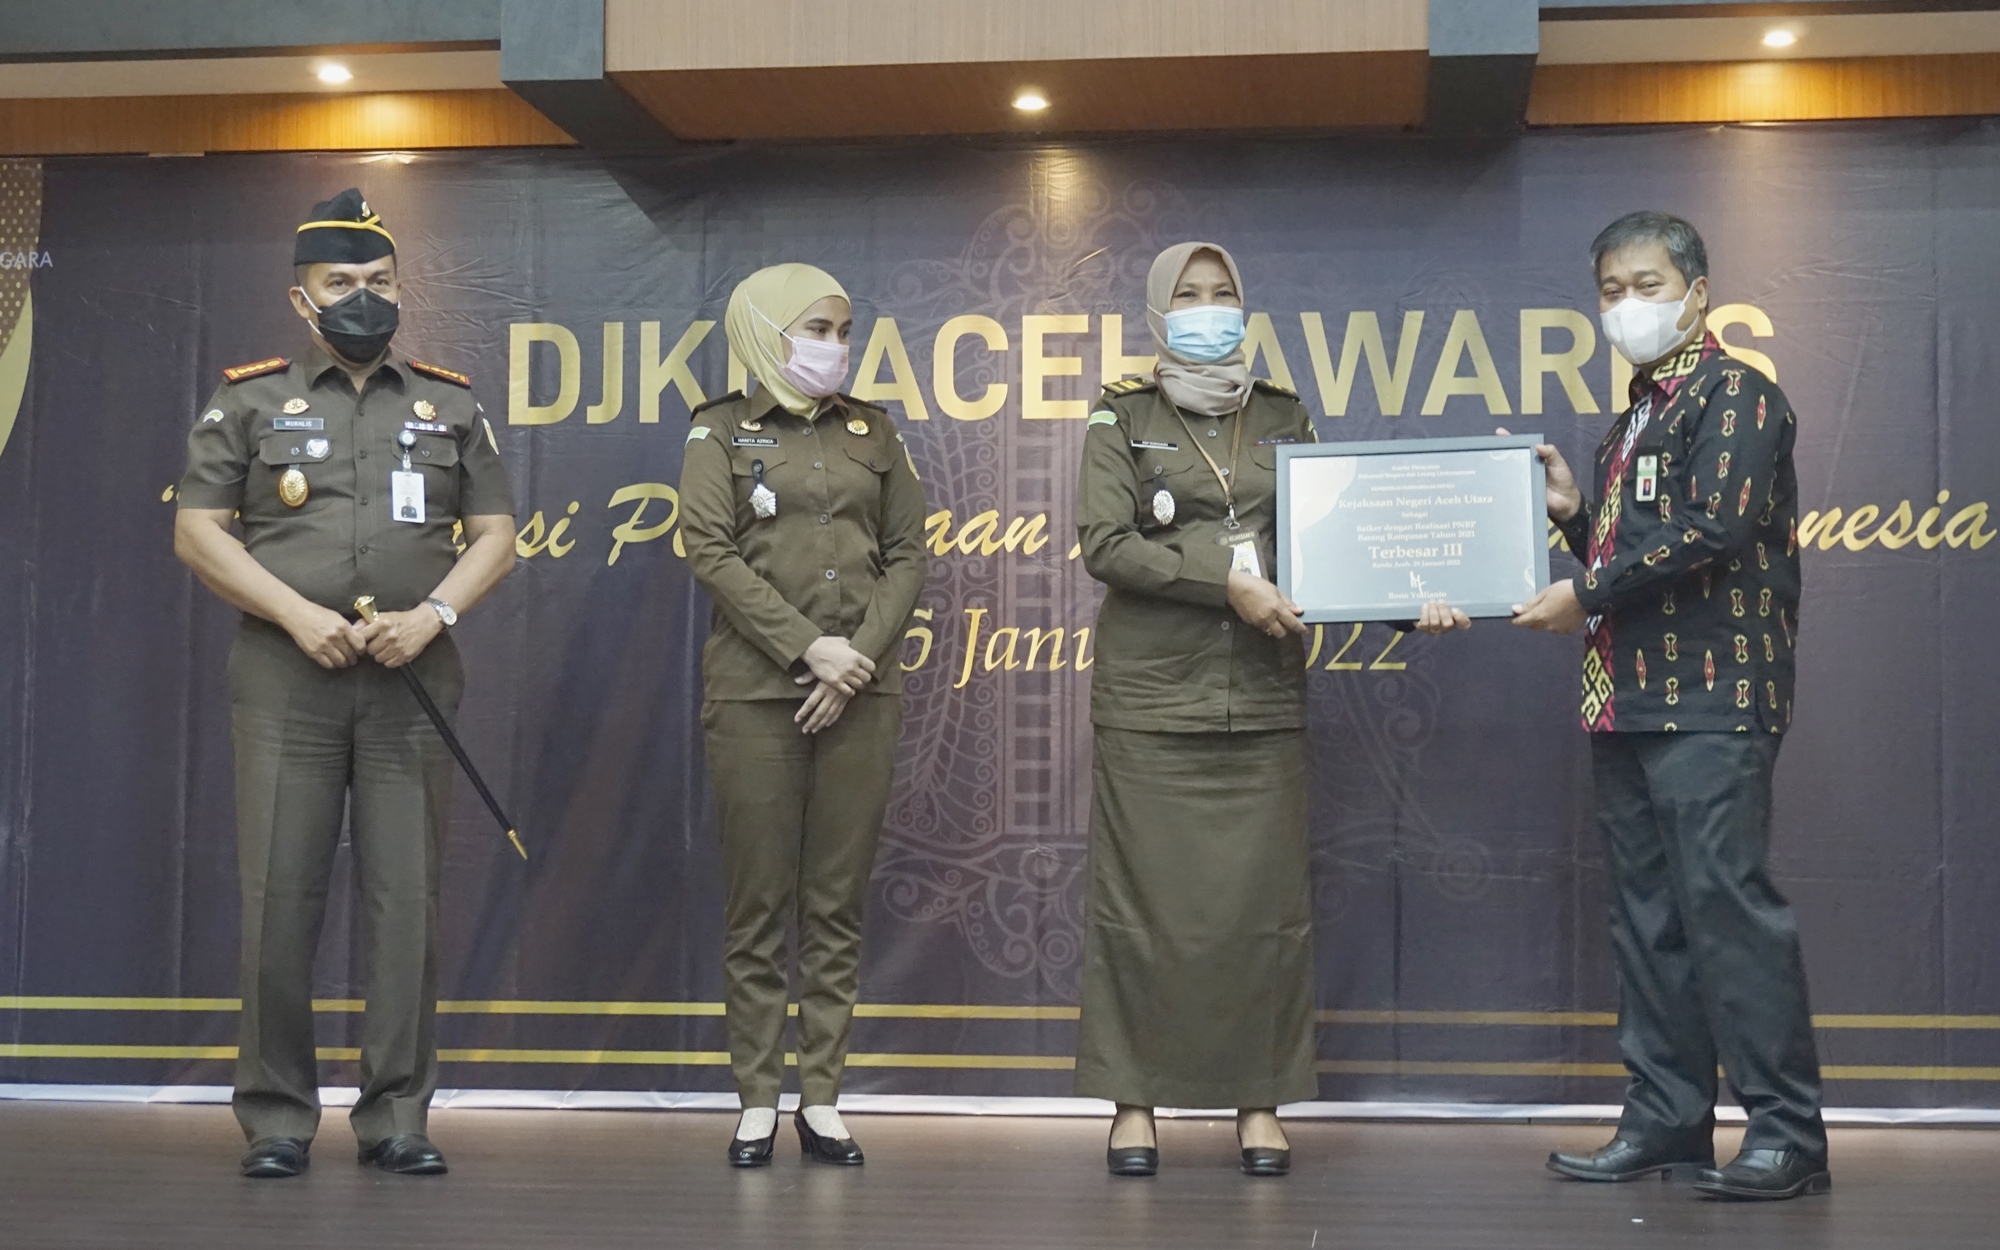 DJKN Aceh Awards: “ Kolaborasi Pengelolaan Aset Menuju Indonesia Maju”